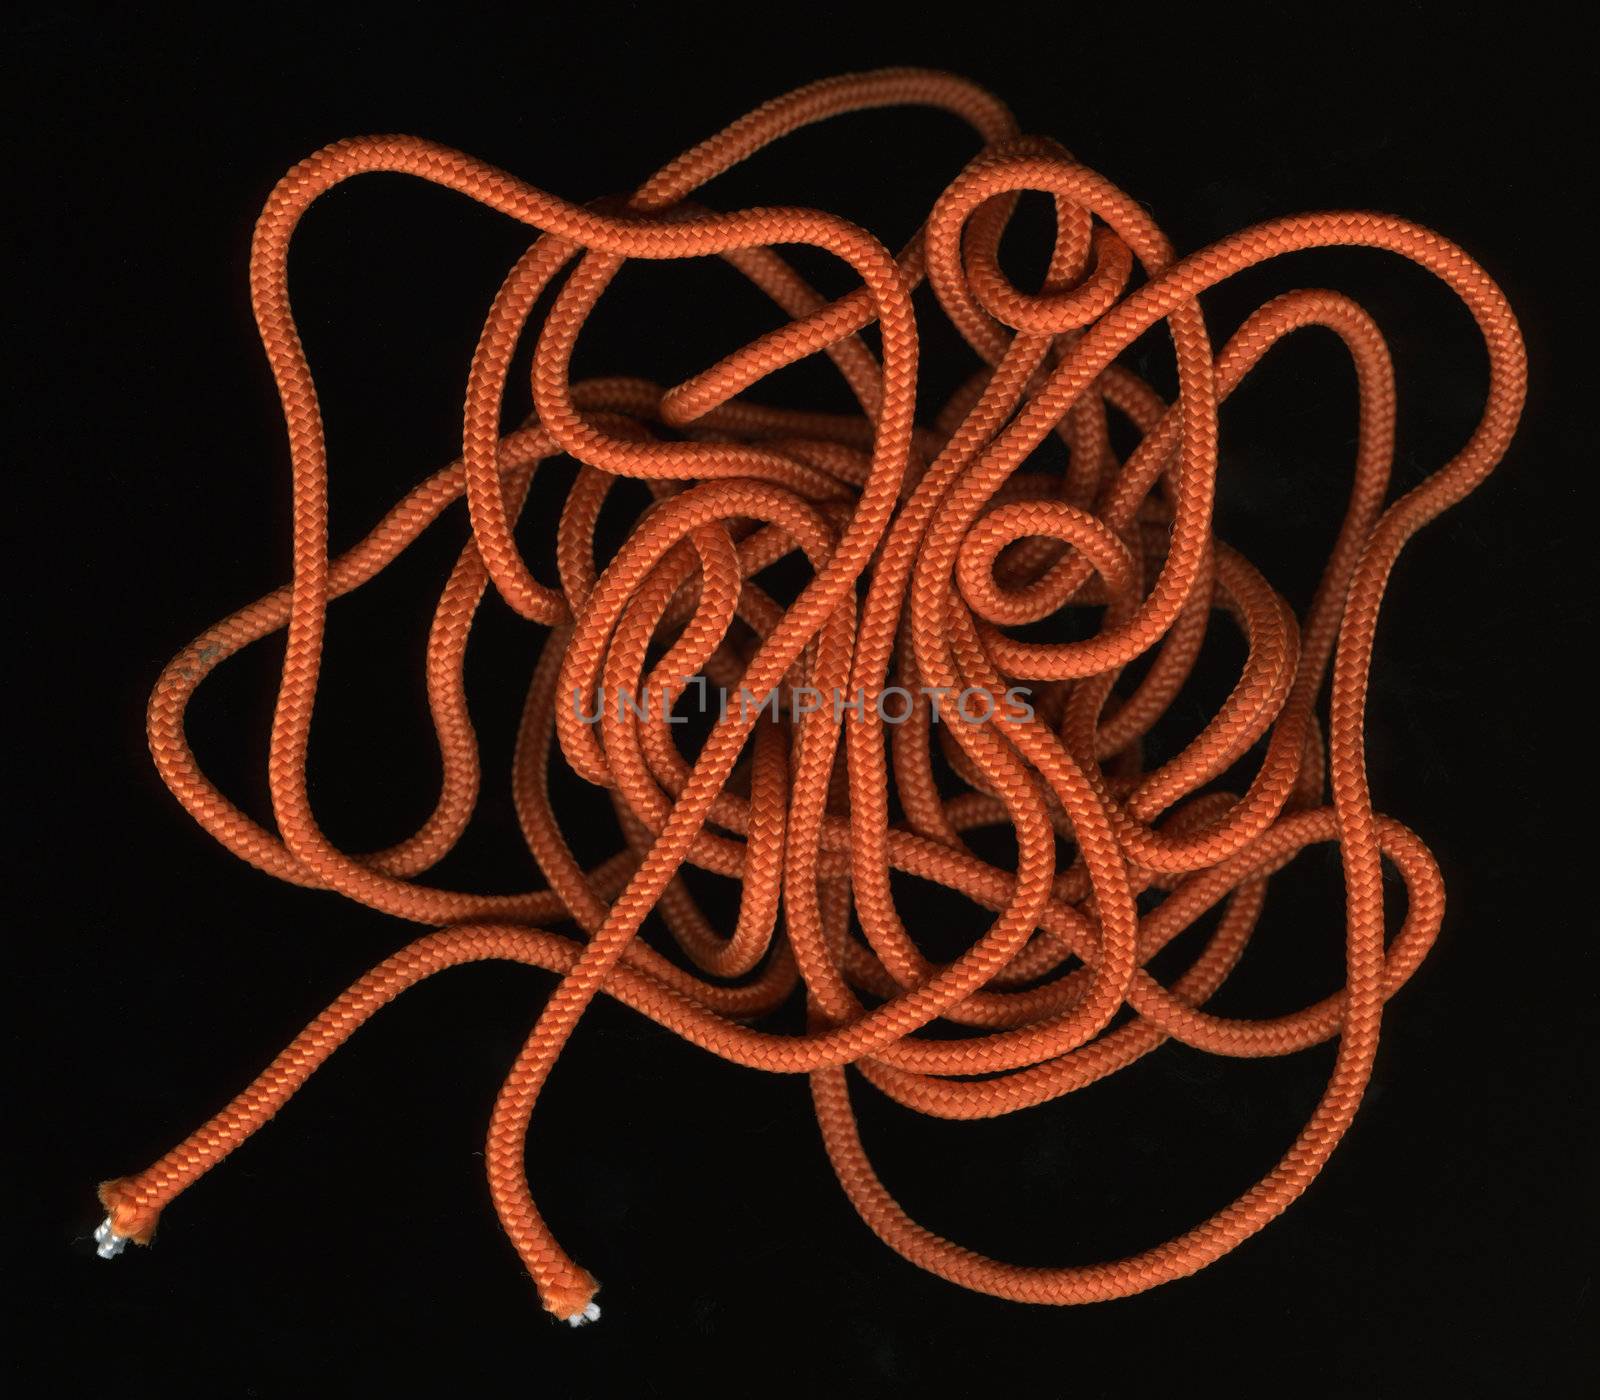 loose coils of orange, nylon cord by PixelsAway